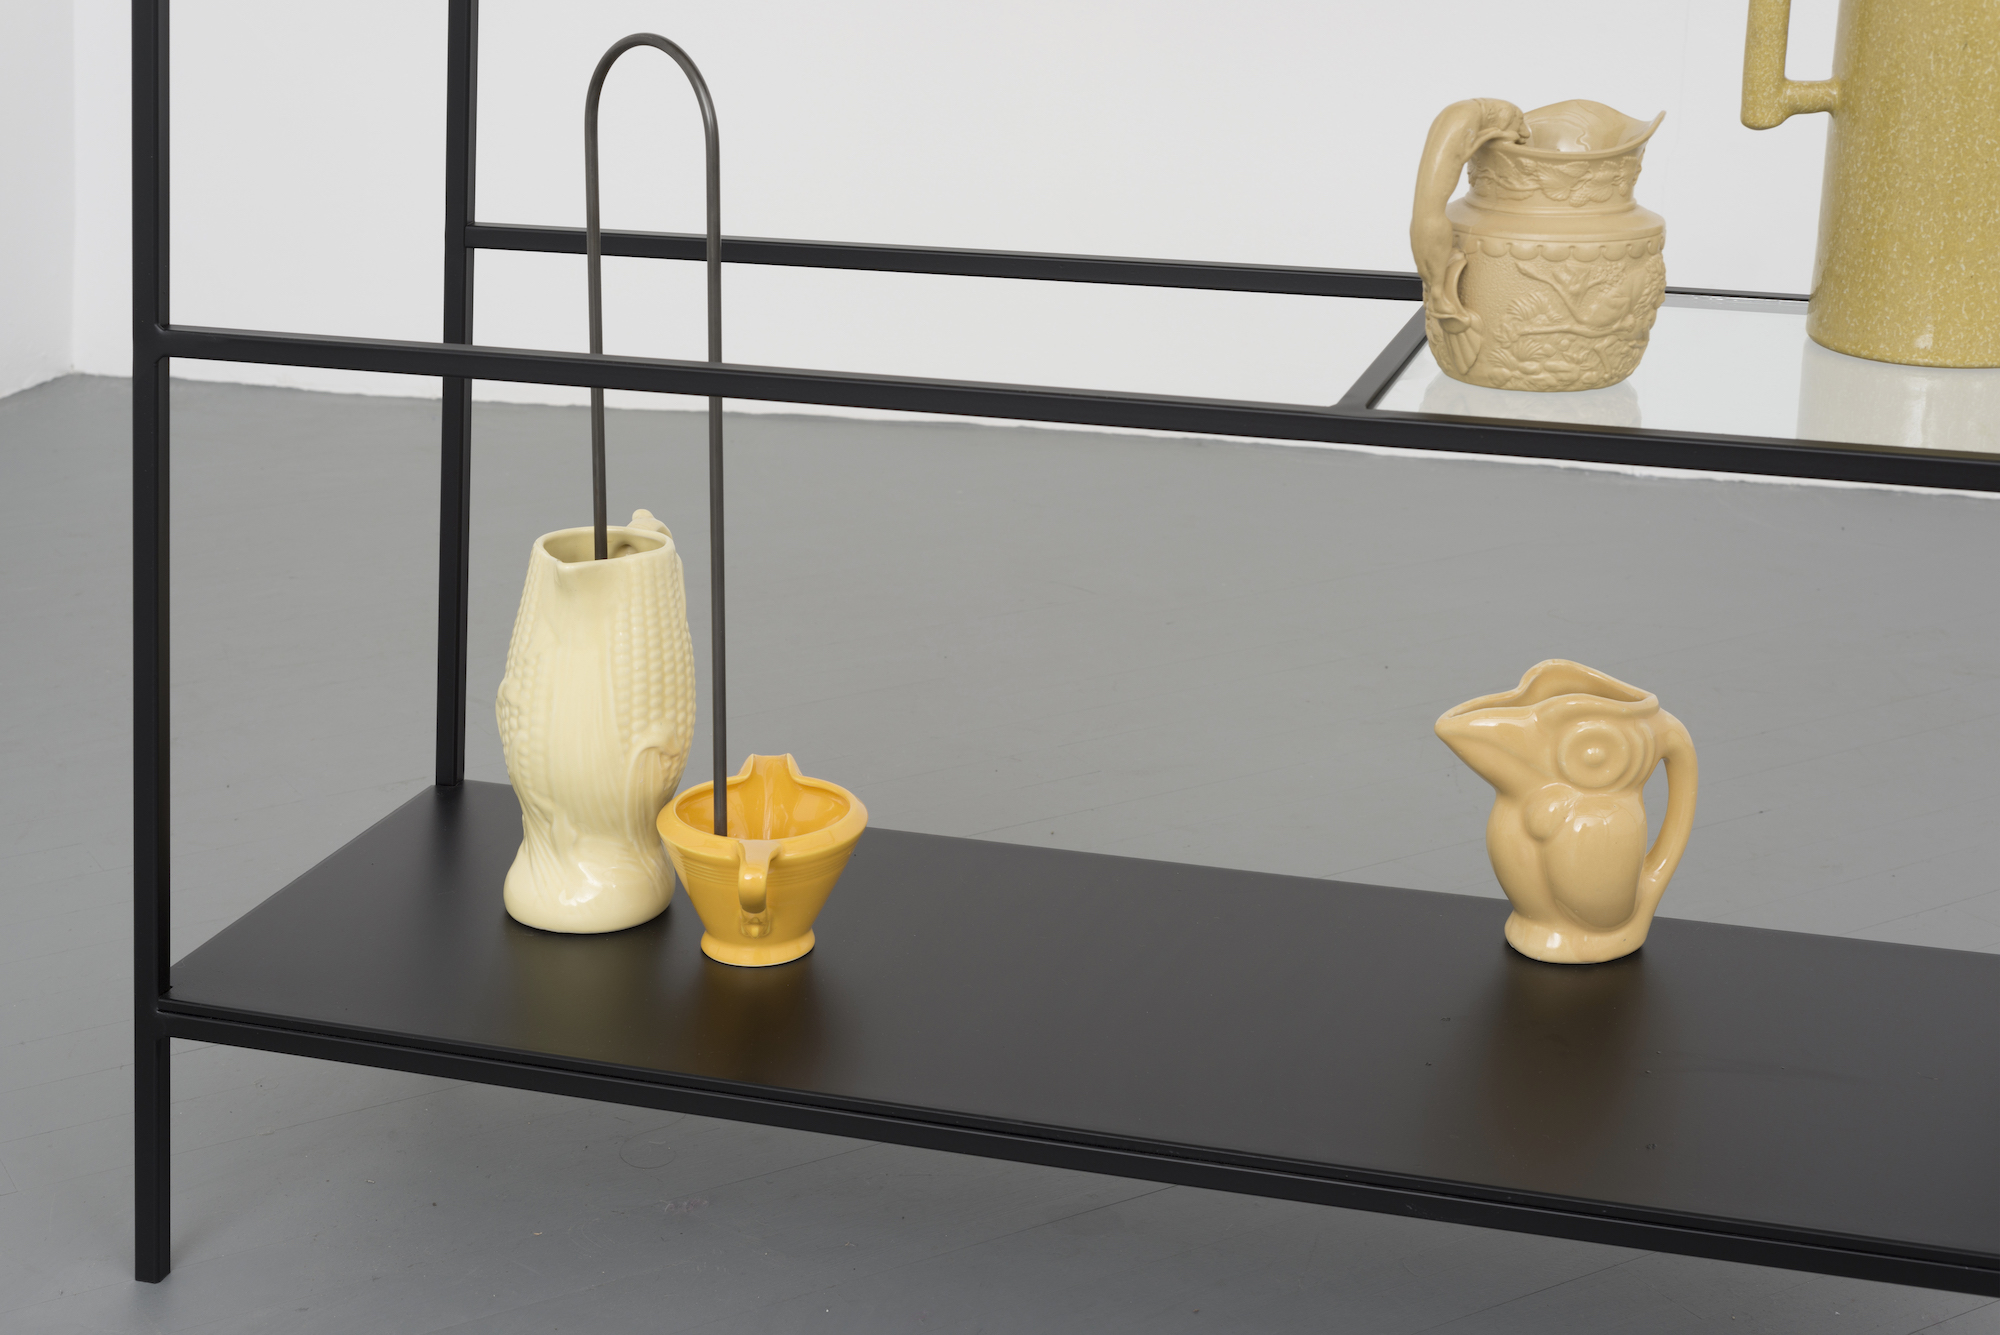 ceramic vessels on a shelf